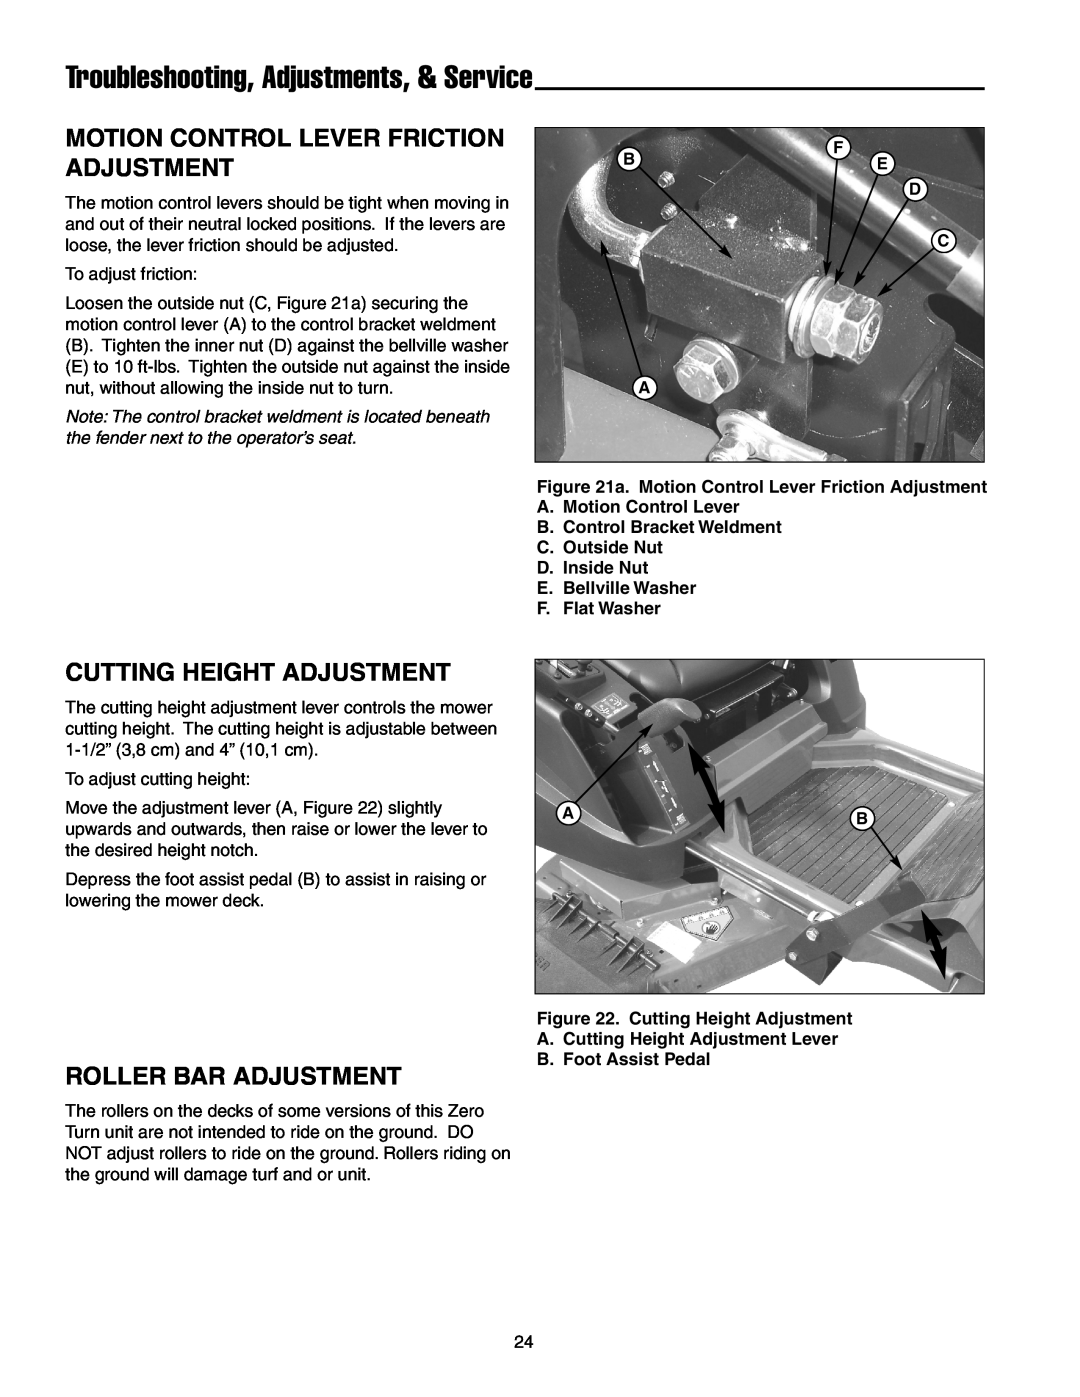 Simplicity 7800071, 7800072 Motion Control Lever Friction Adjustment, Cutting Height Adjustment, Roller Bar Adjustment 